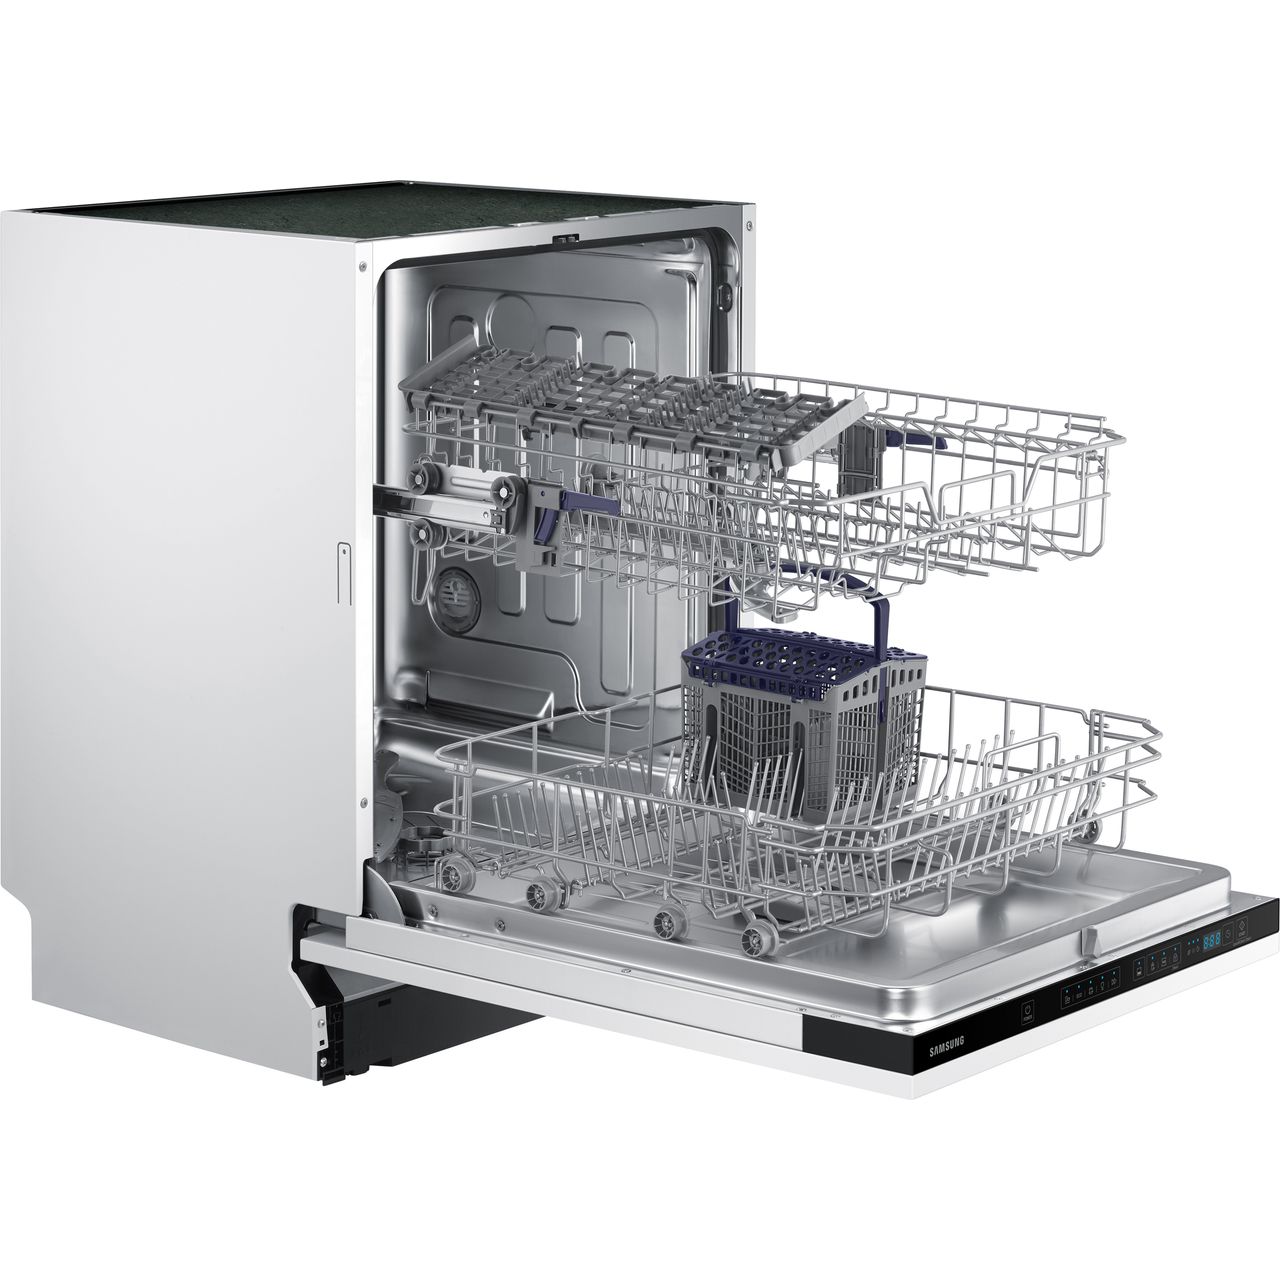 samsung slimline dishwasher